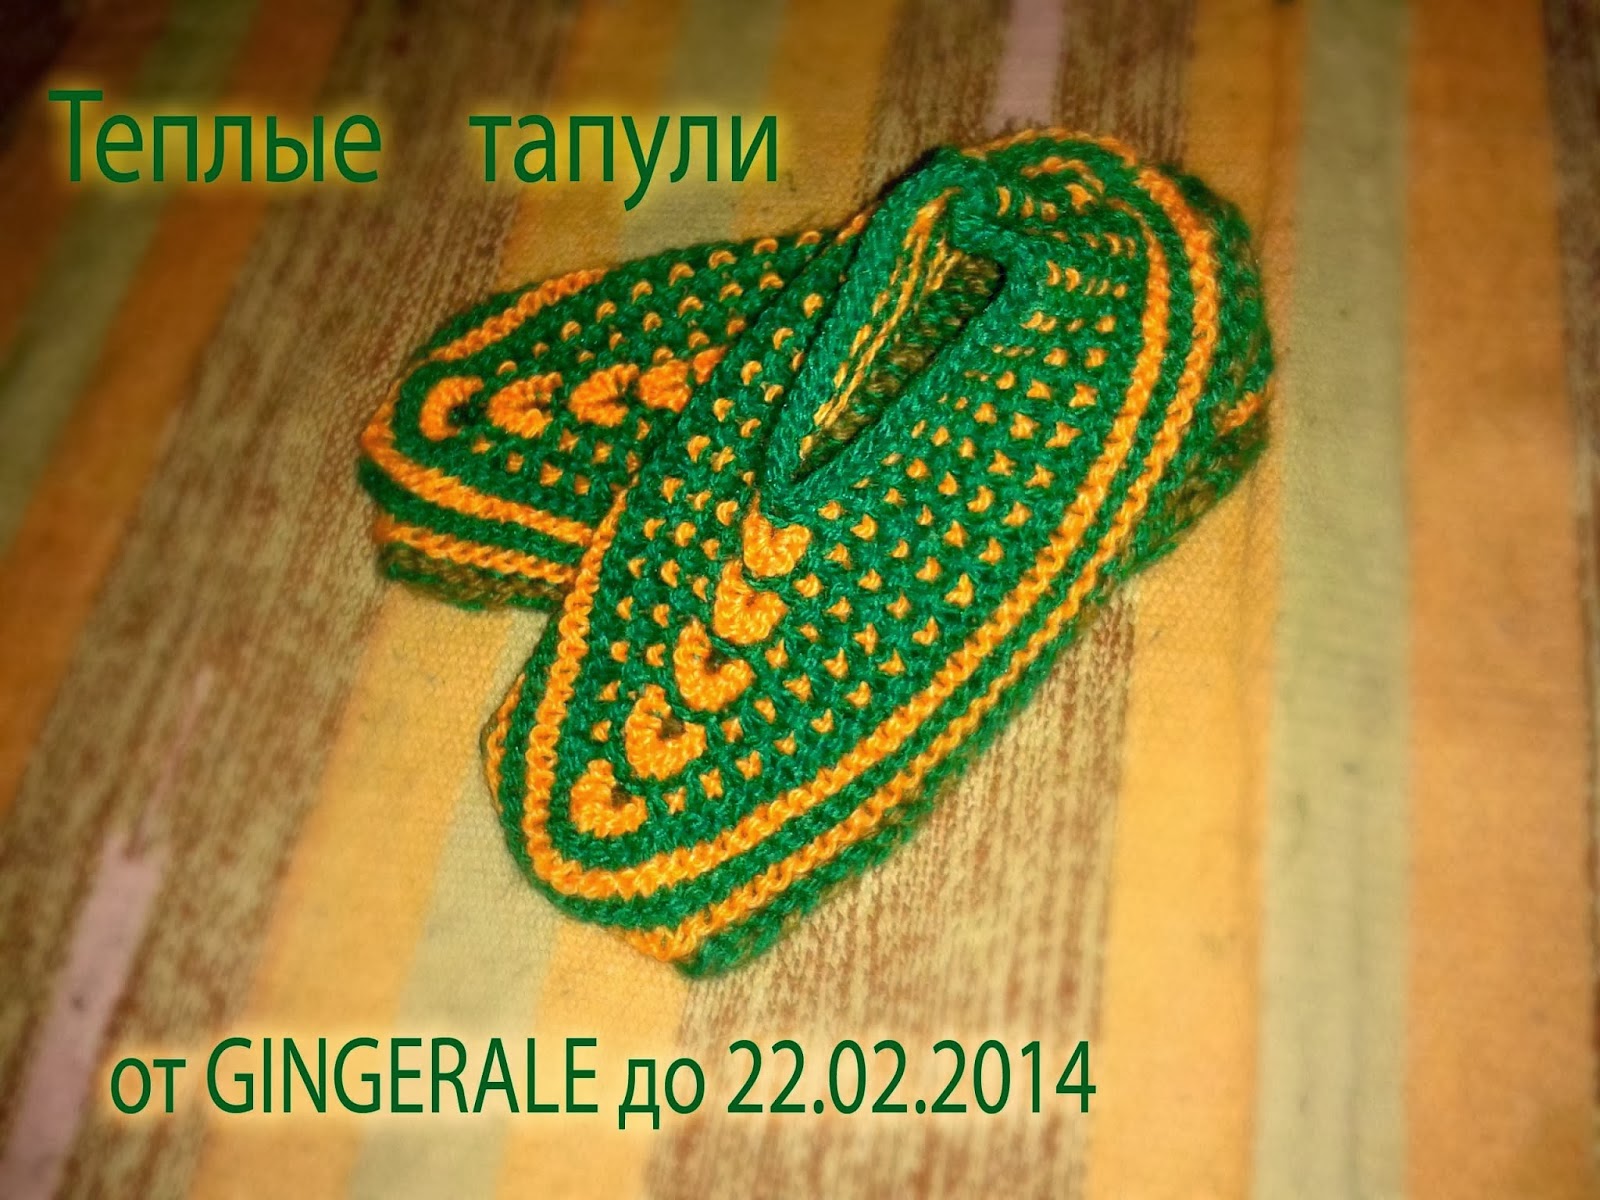 http://ishmawaters.blogspot.ru/2014/01/blog-post_29.html